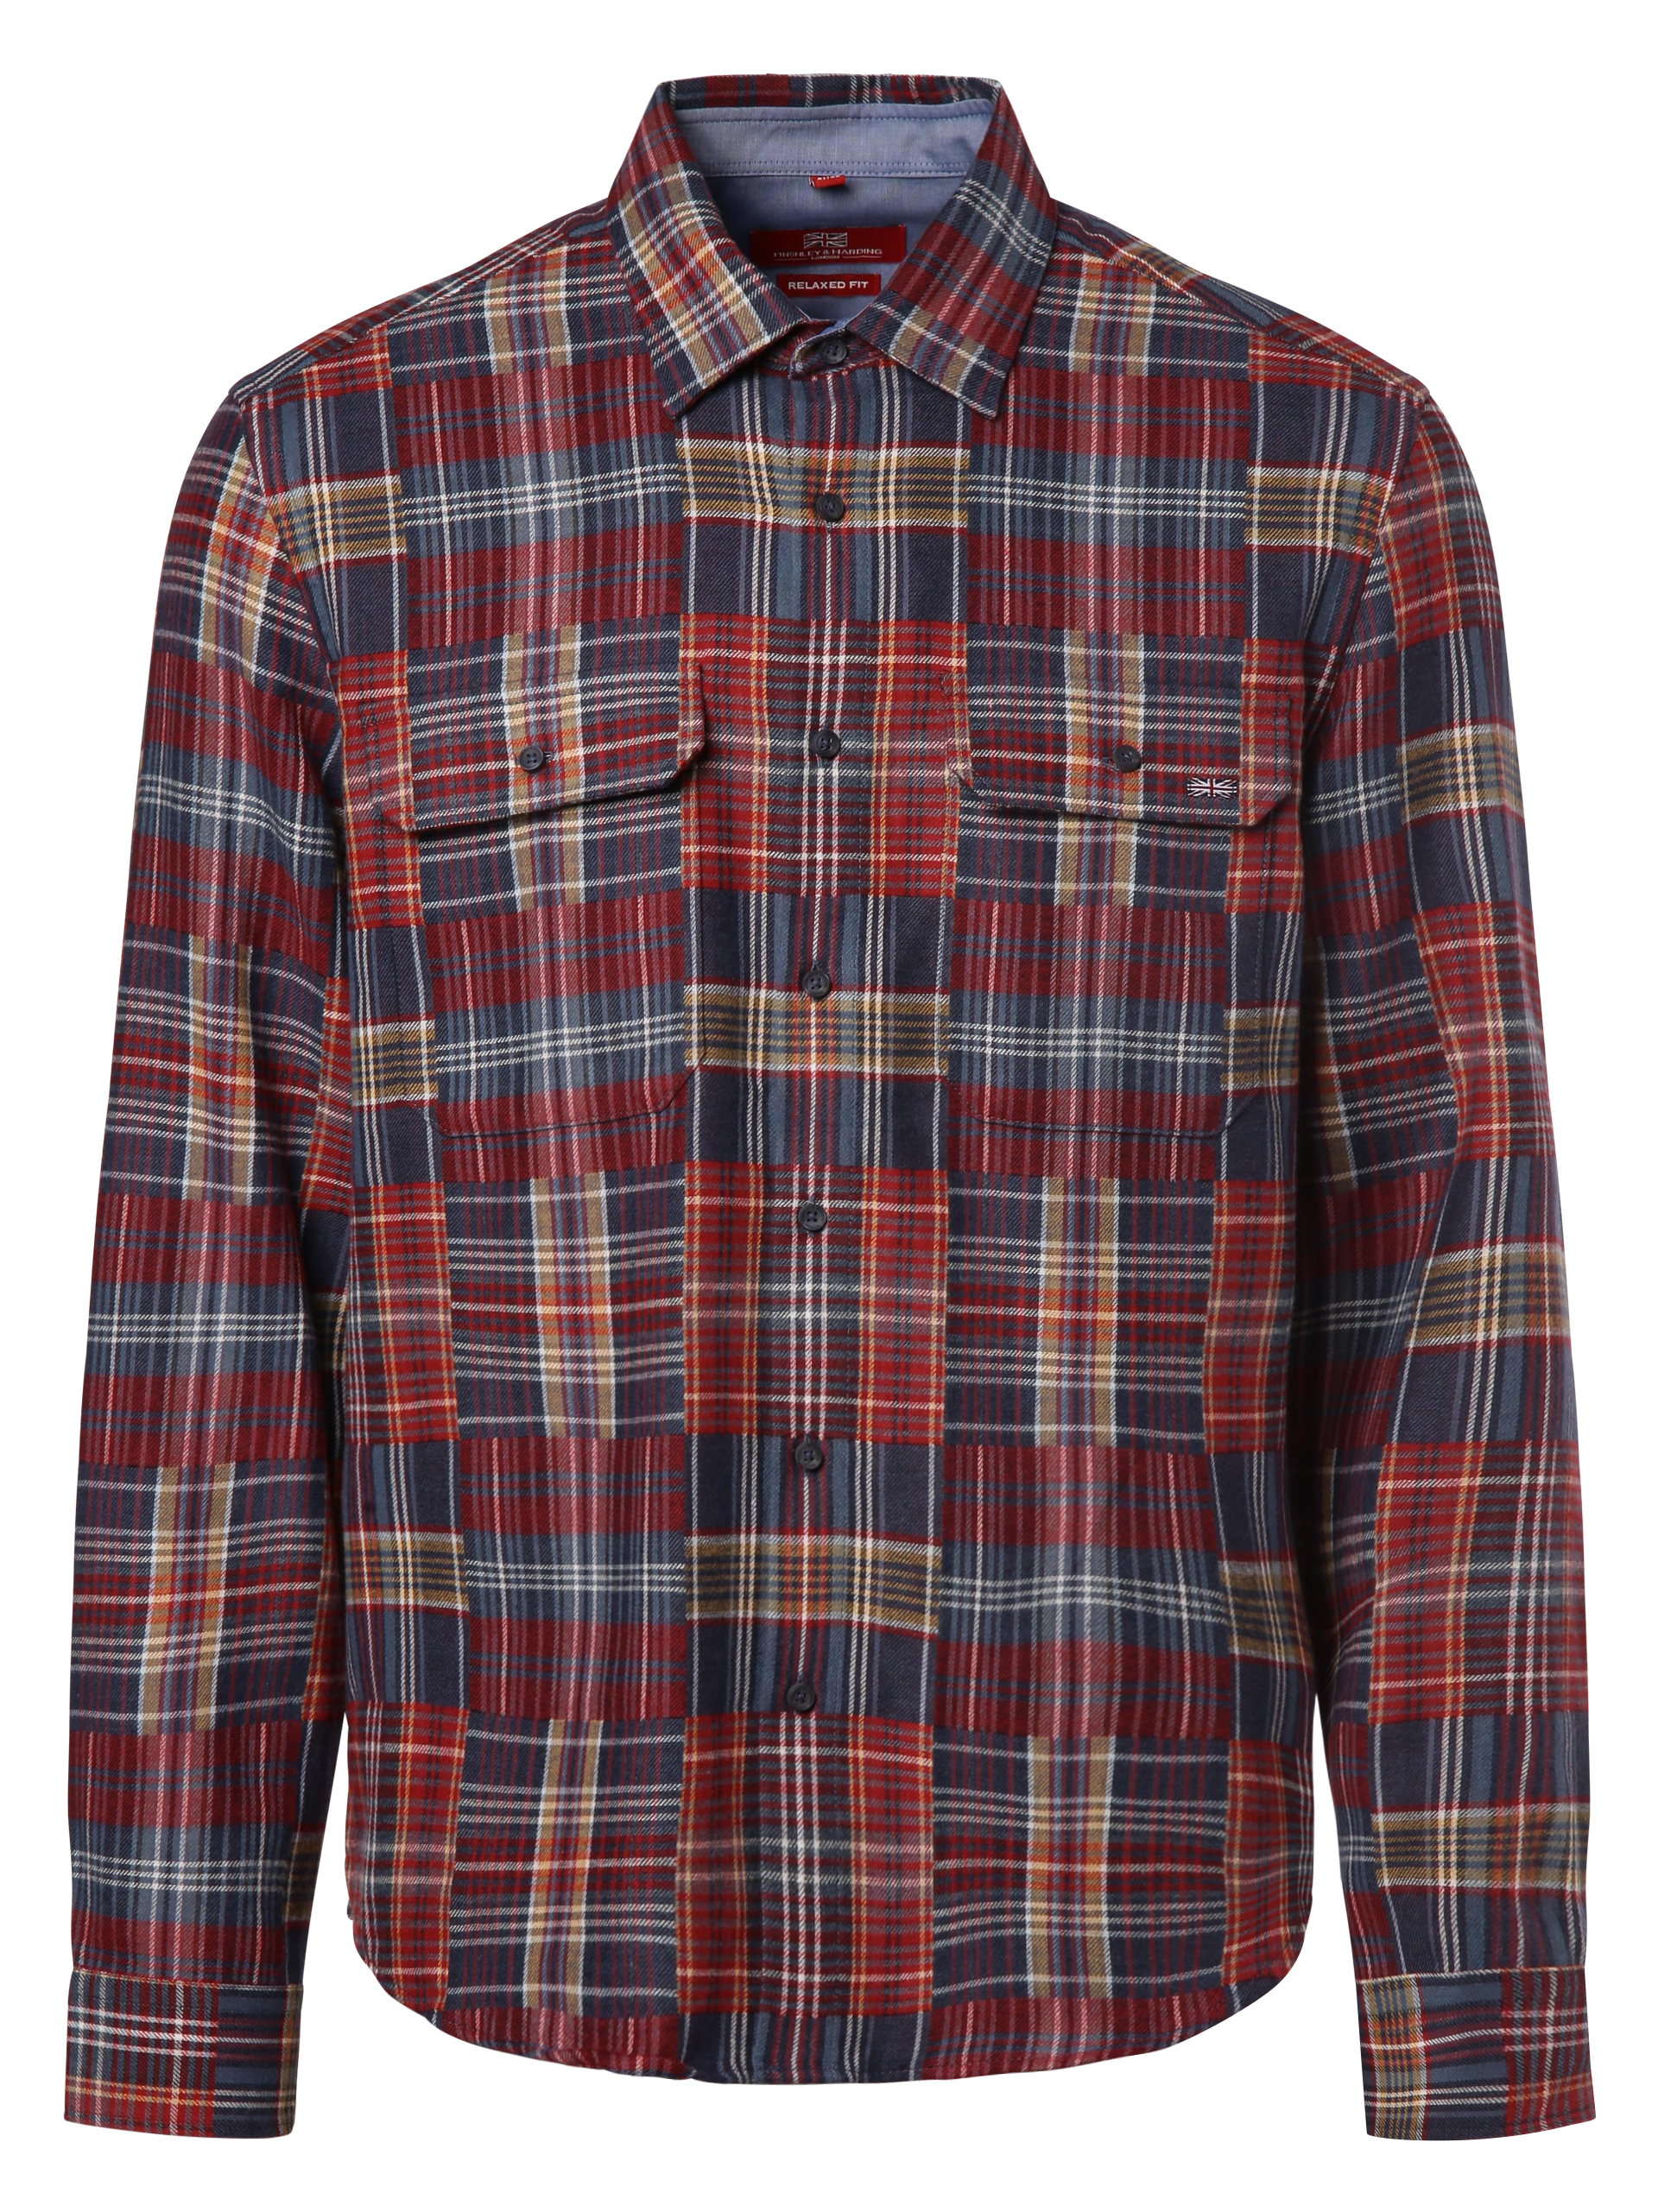 Рубашка Finshley & Harding London FHL Lock, красный